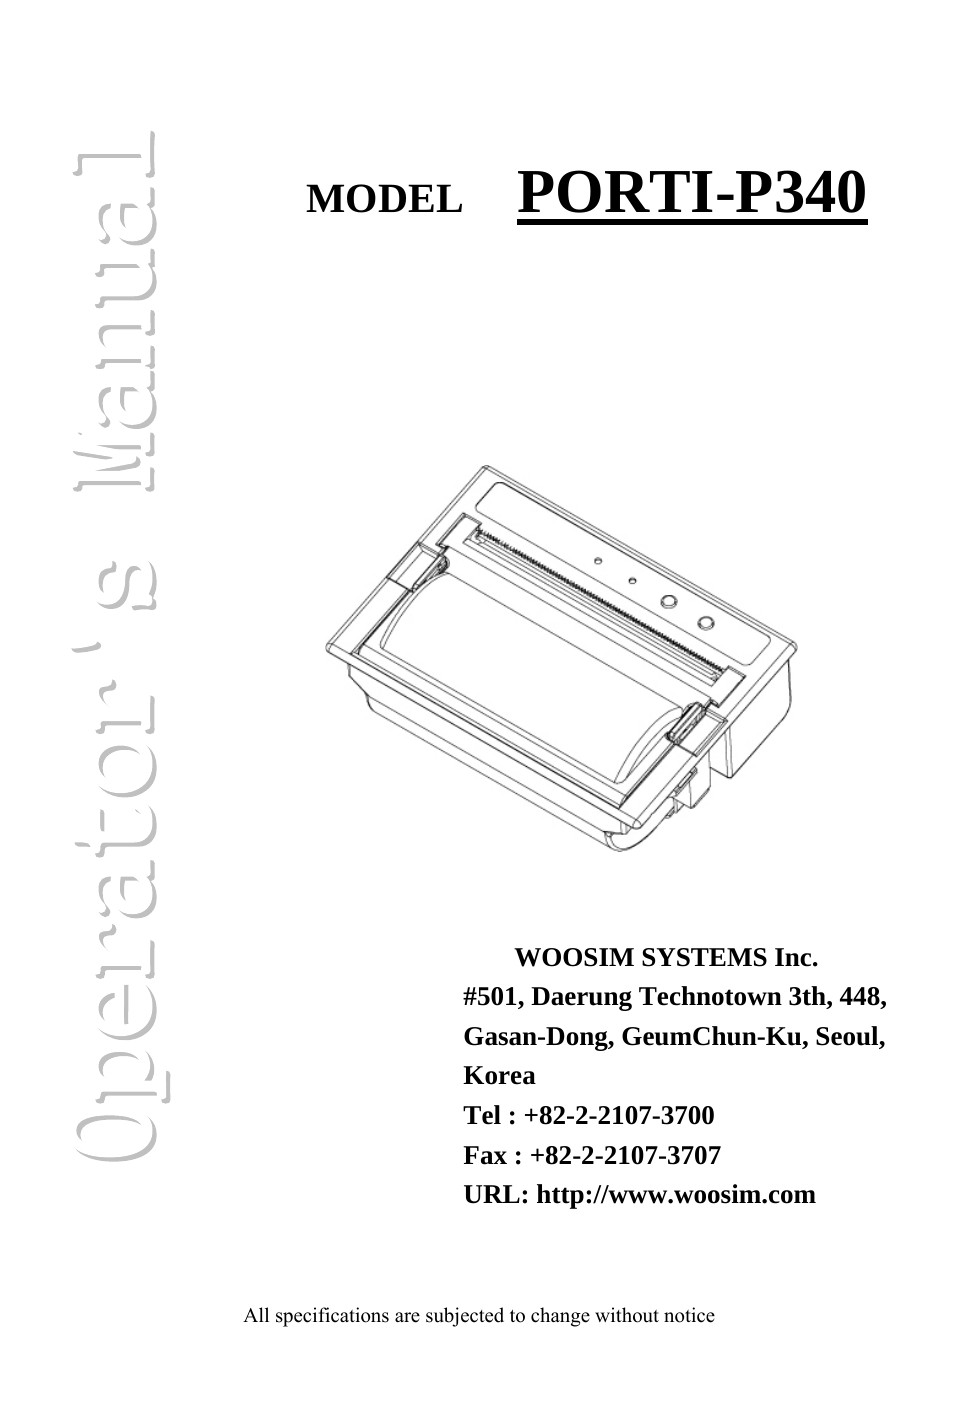                                               MODEL  PORTI-P340 WOOSIM SYSTEMS Inc. #501, Daerung Technotown 3th, 448, Gasan-Dong, GeumChun-Ku, Seoul, Korea Tel : +82-2-2107-3700 Fax : +82-2-2107-3707 URL: http://www.woosim.com   All specifications are subjected to change without notice 